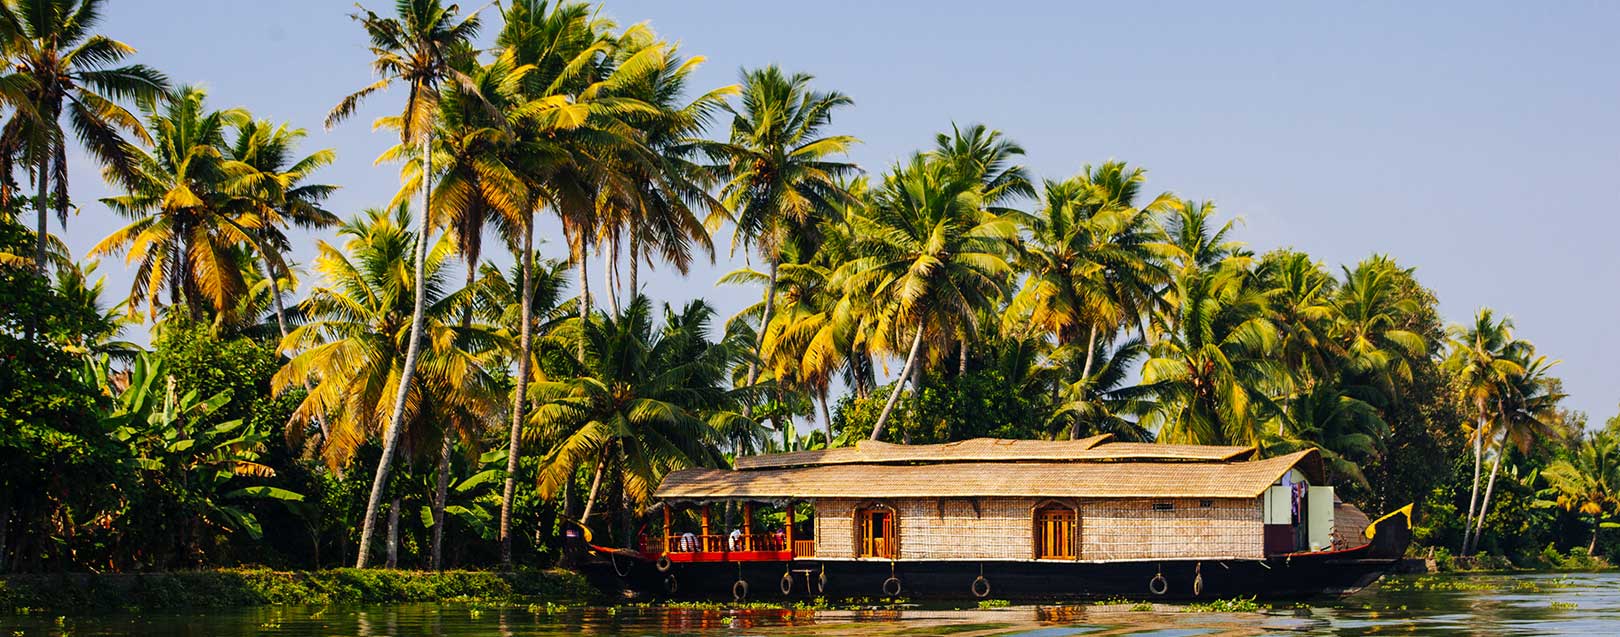 Kerala eyes sharp rise in tourists this year, Kerala Tourism Officer